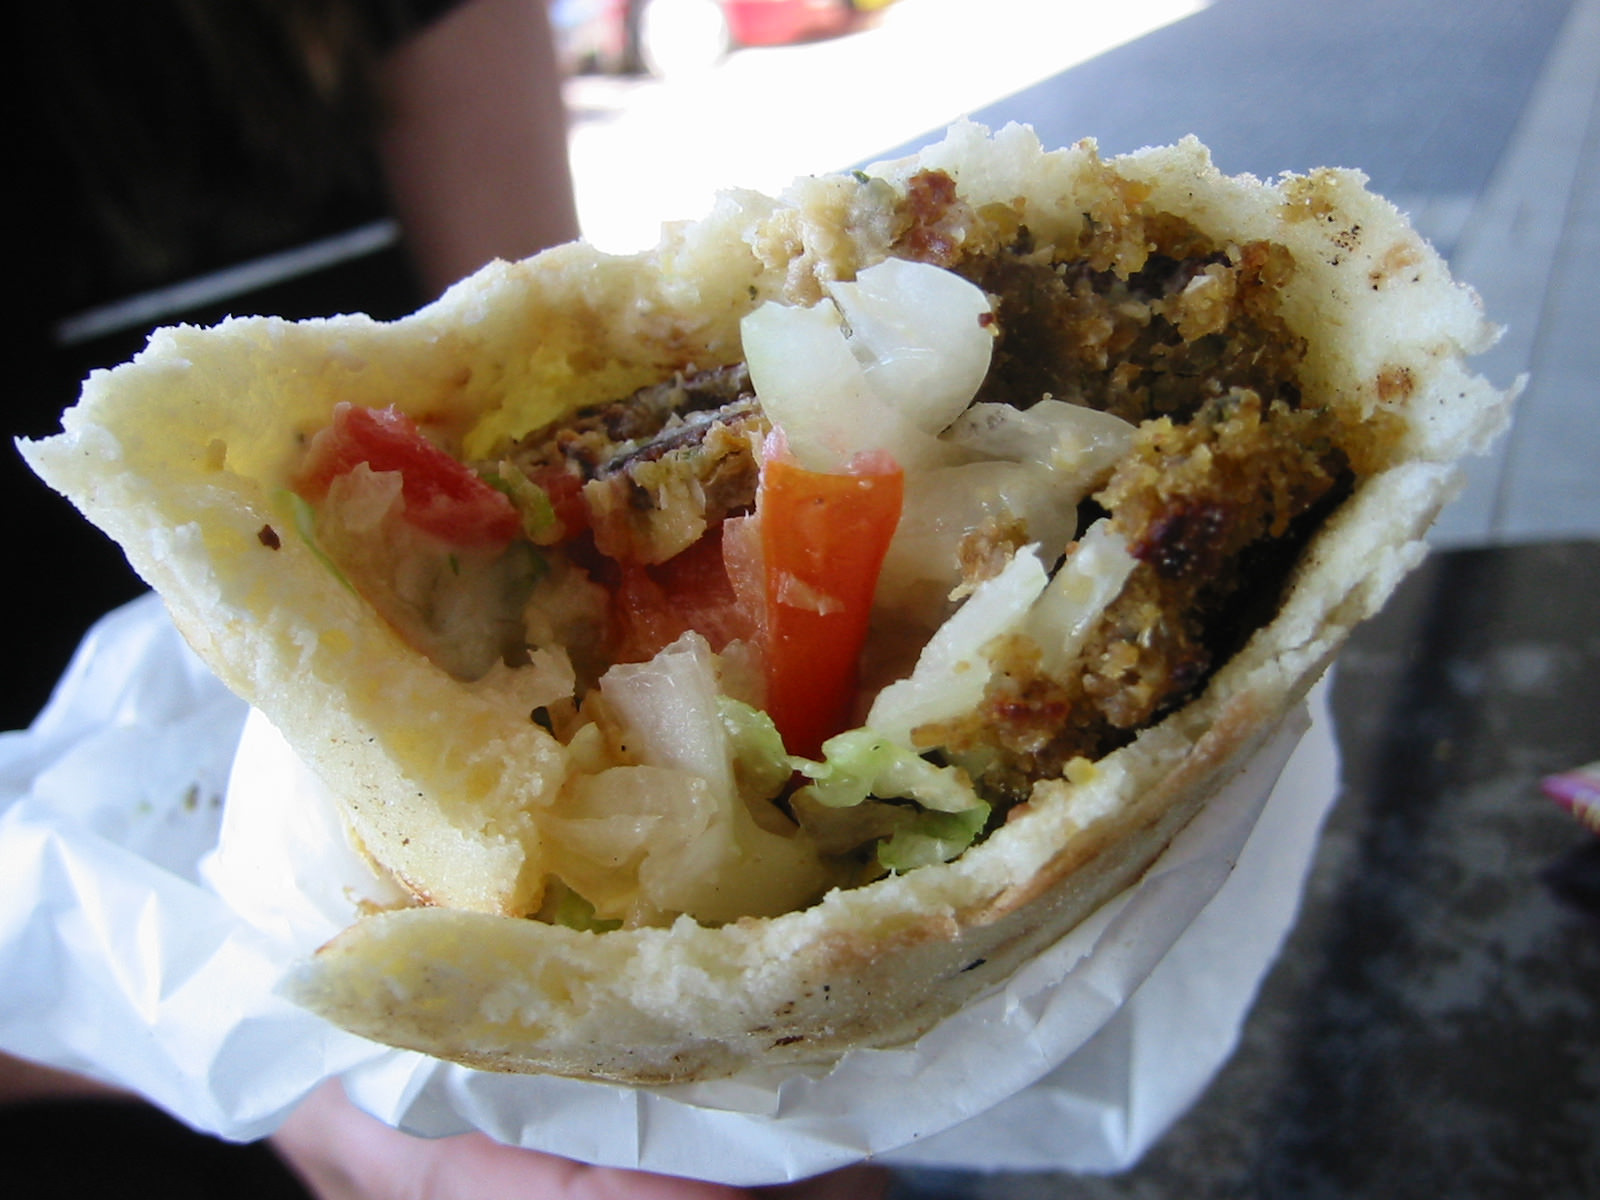 Falafel kebab with salad, hummus and garlic sauce